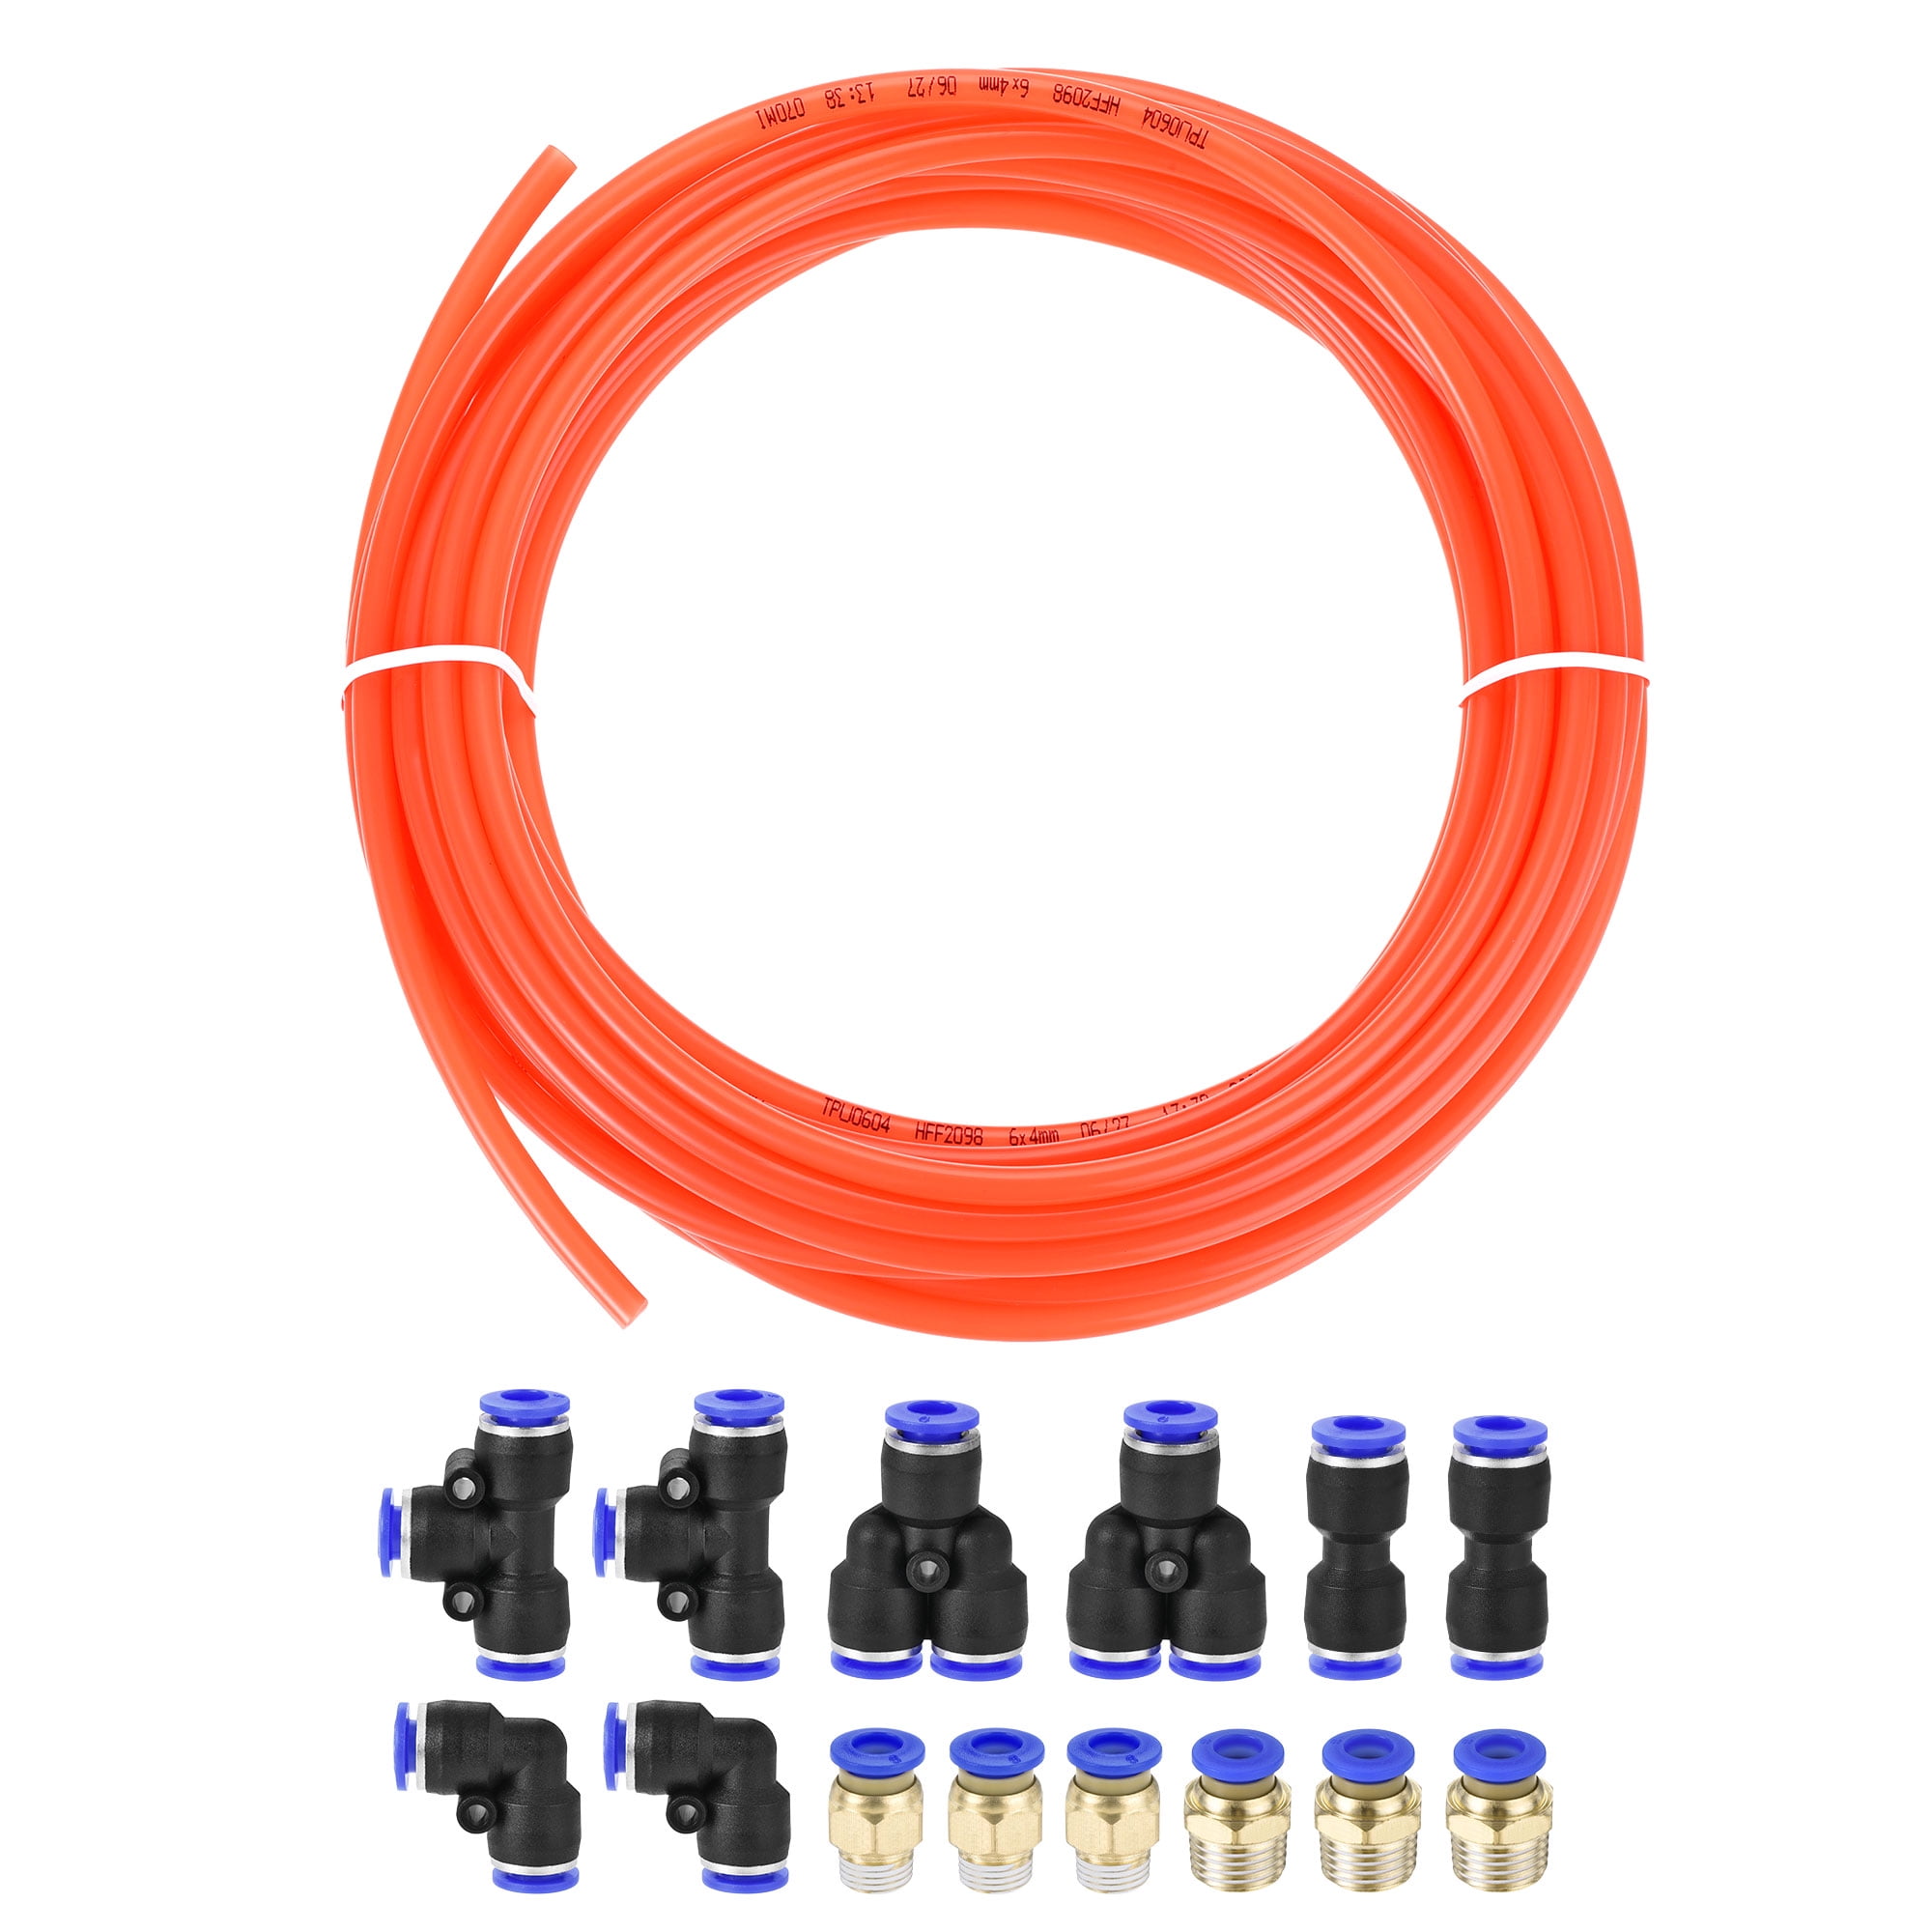 4mm x 6mm Pneumatic Air Compressor Tubing PU Hose Tube Pipe 7 meter Orange 